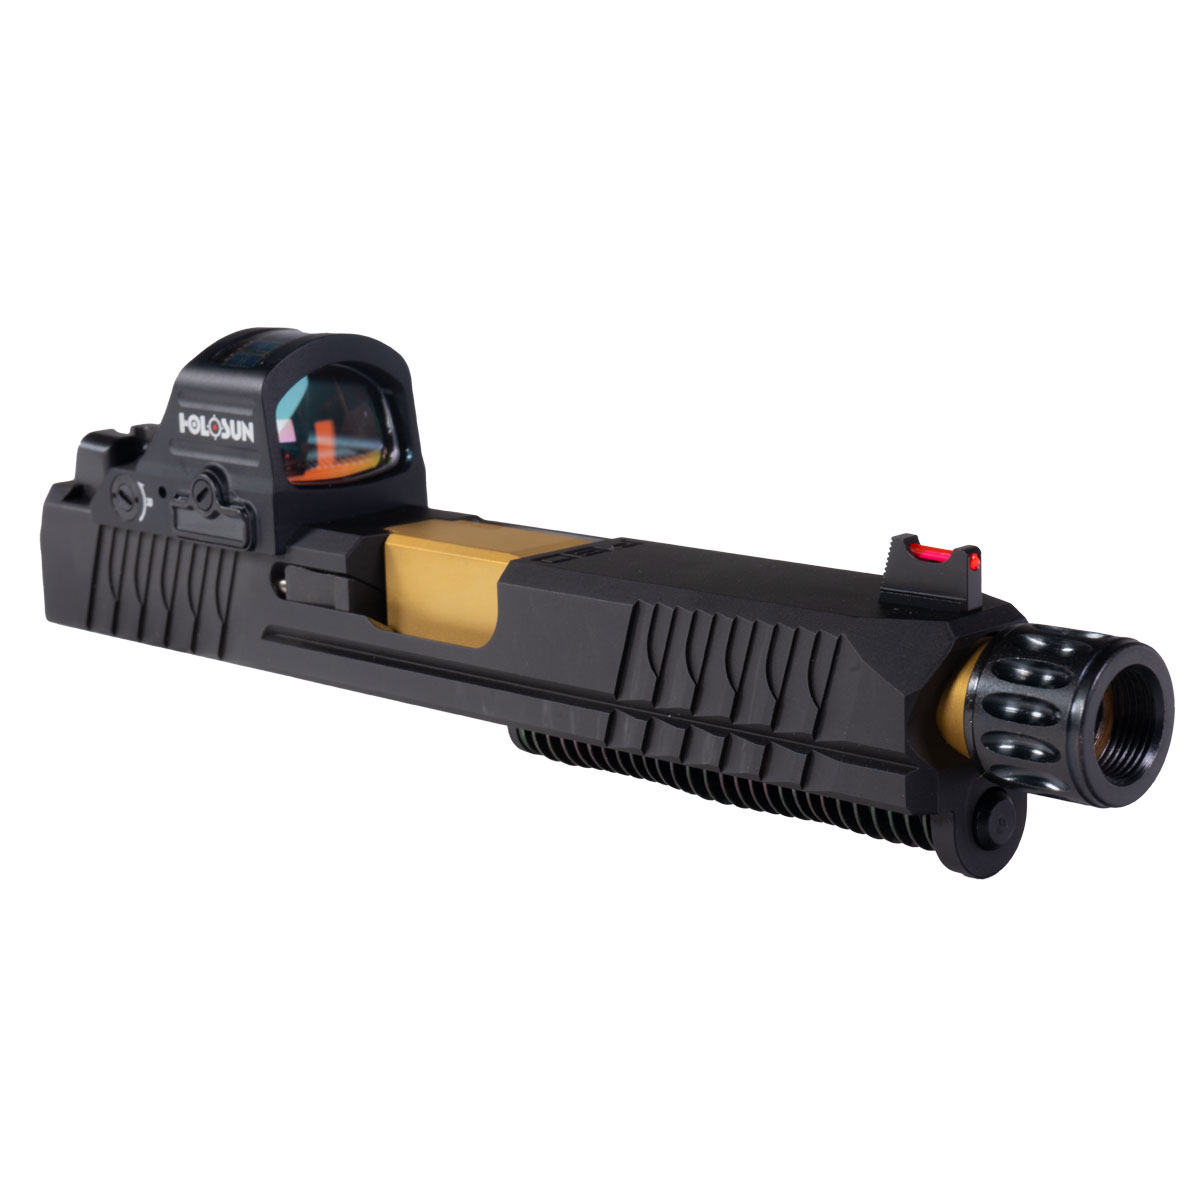 OTD 'Fiat Lux w/ HS507C-X2 Red Dot' 9mm Complete Slide Kit - Glock 19 Gen 1-3 Compatible